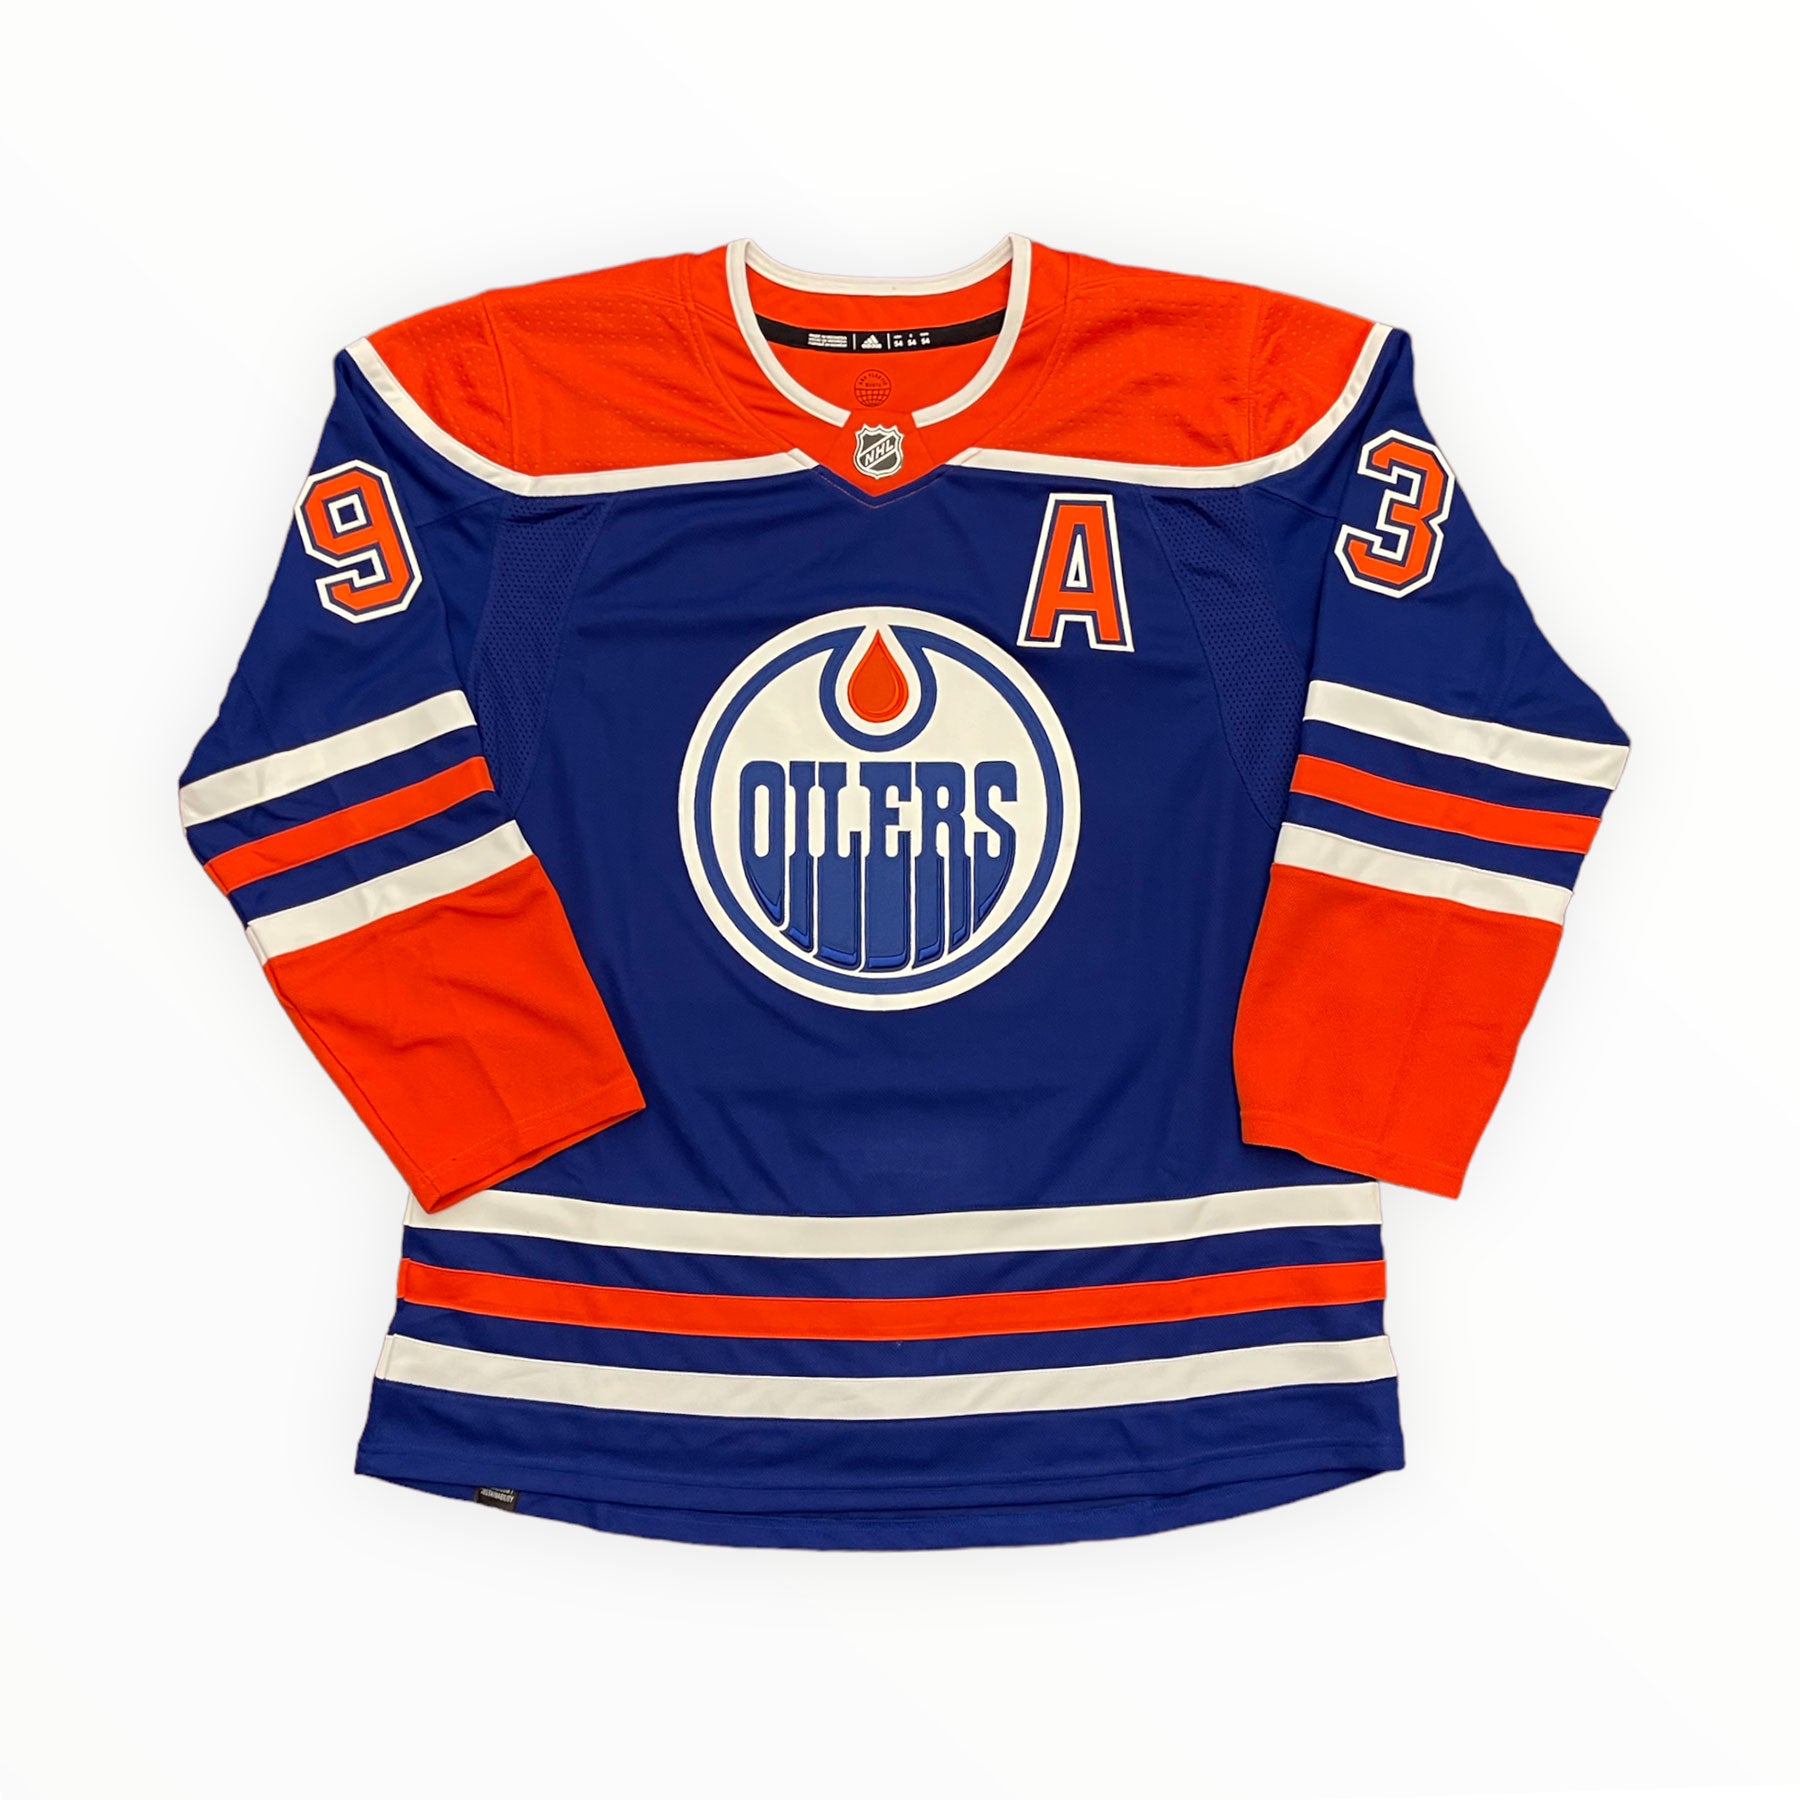 2012-13 Ryan Nugent-Hopkins Edmonton Oilers Game Worn Jersey – Battle of  Alberta – Photo Match – Team Letter